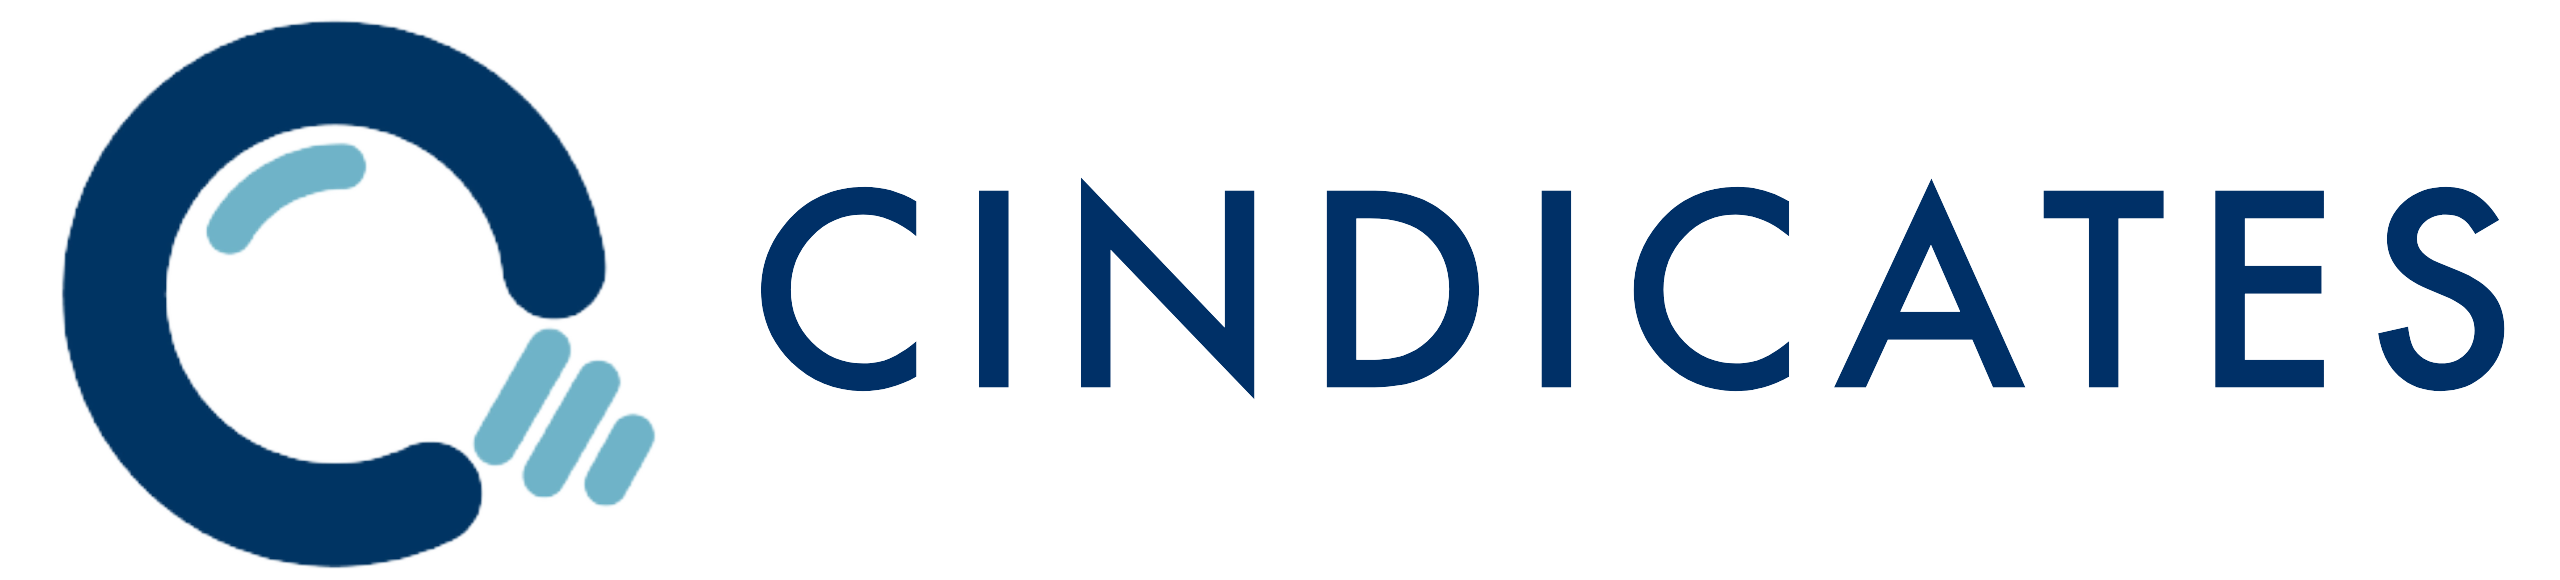 Cindicates Logo - Colored